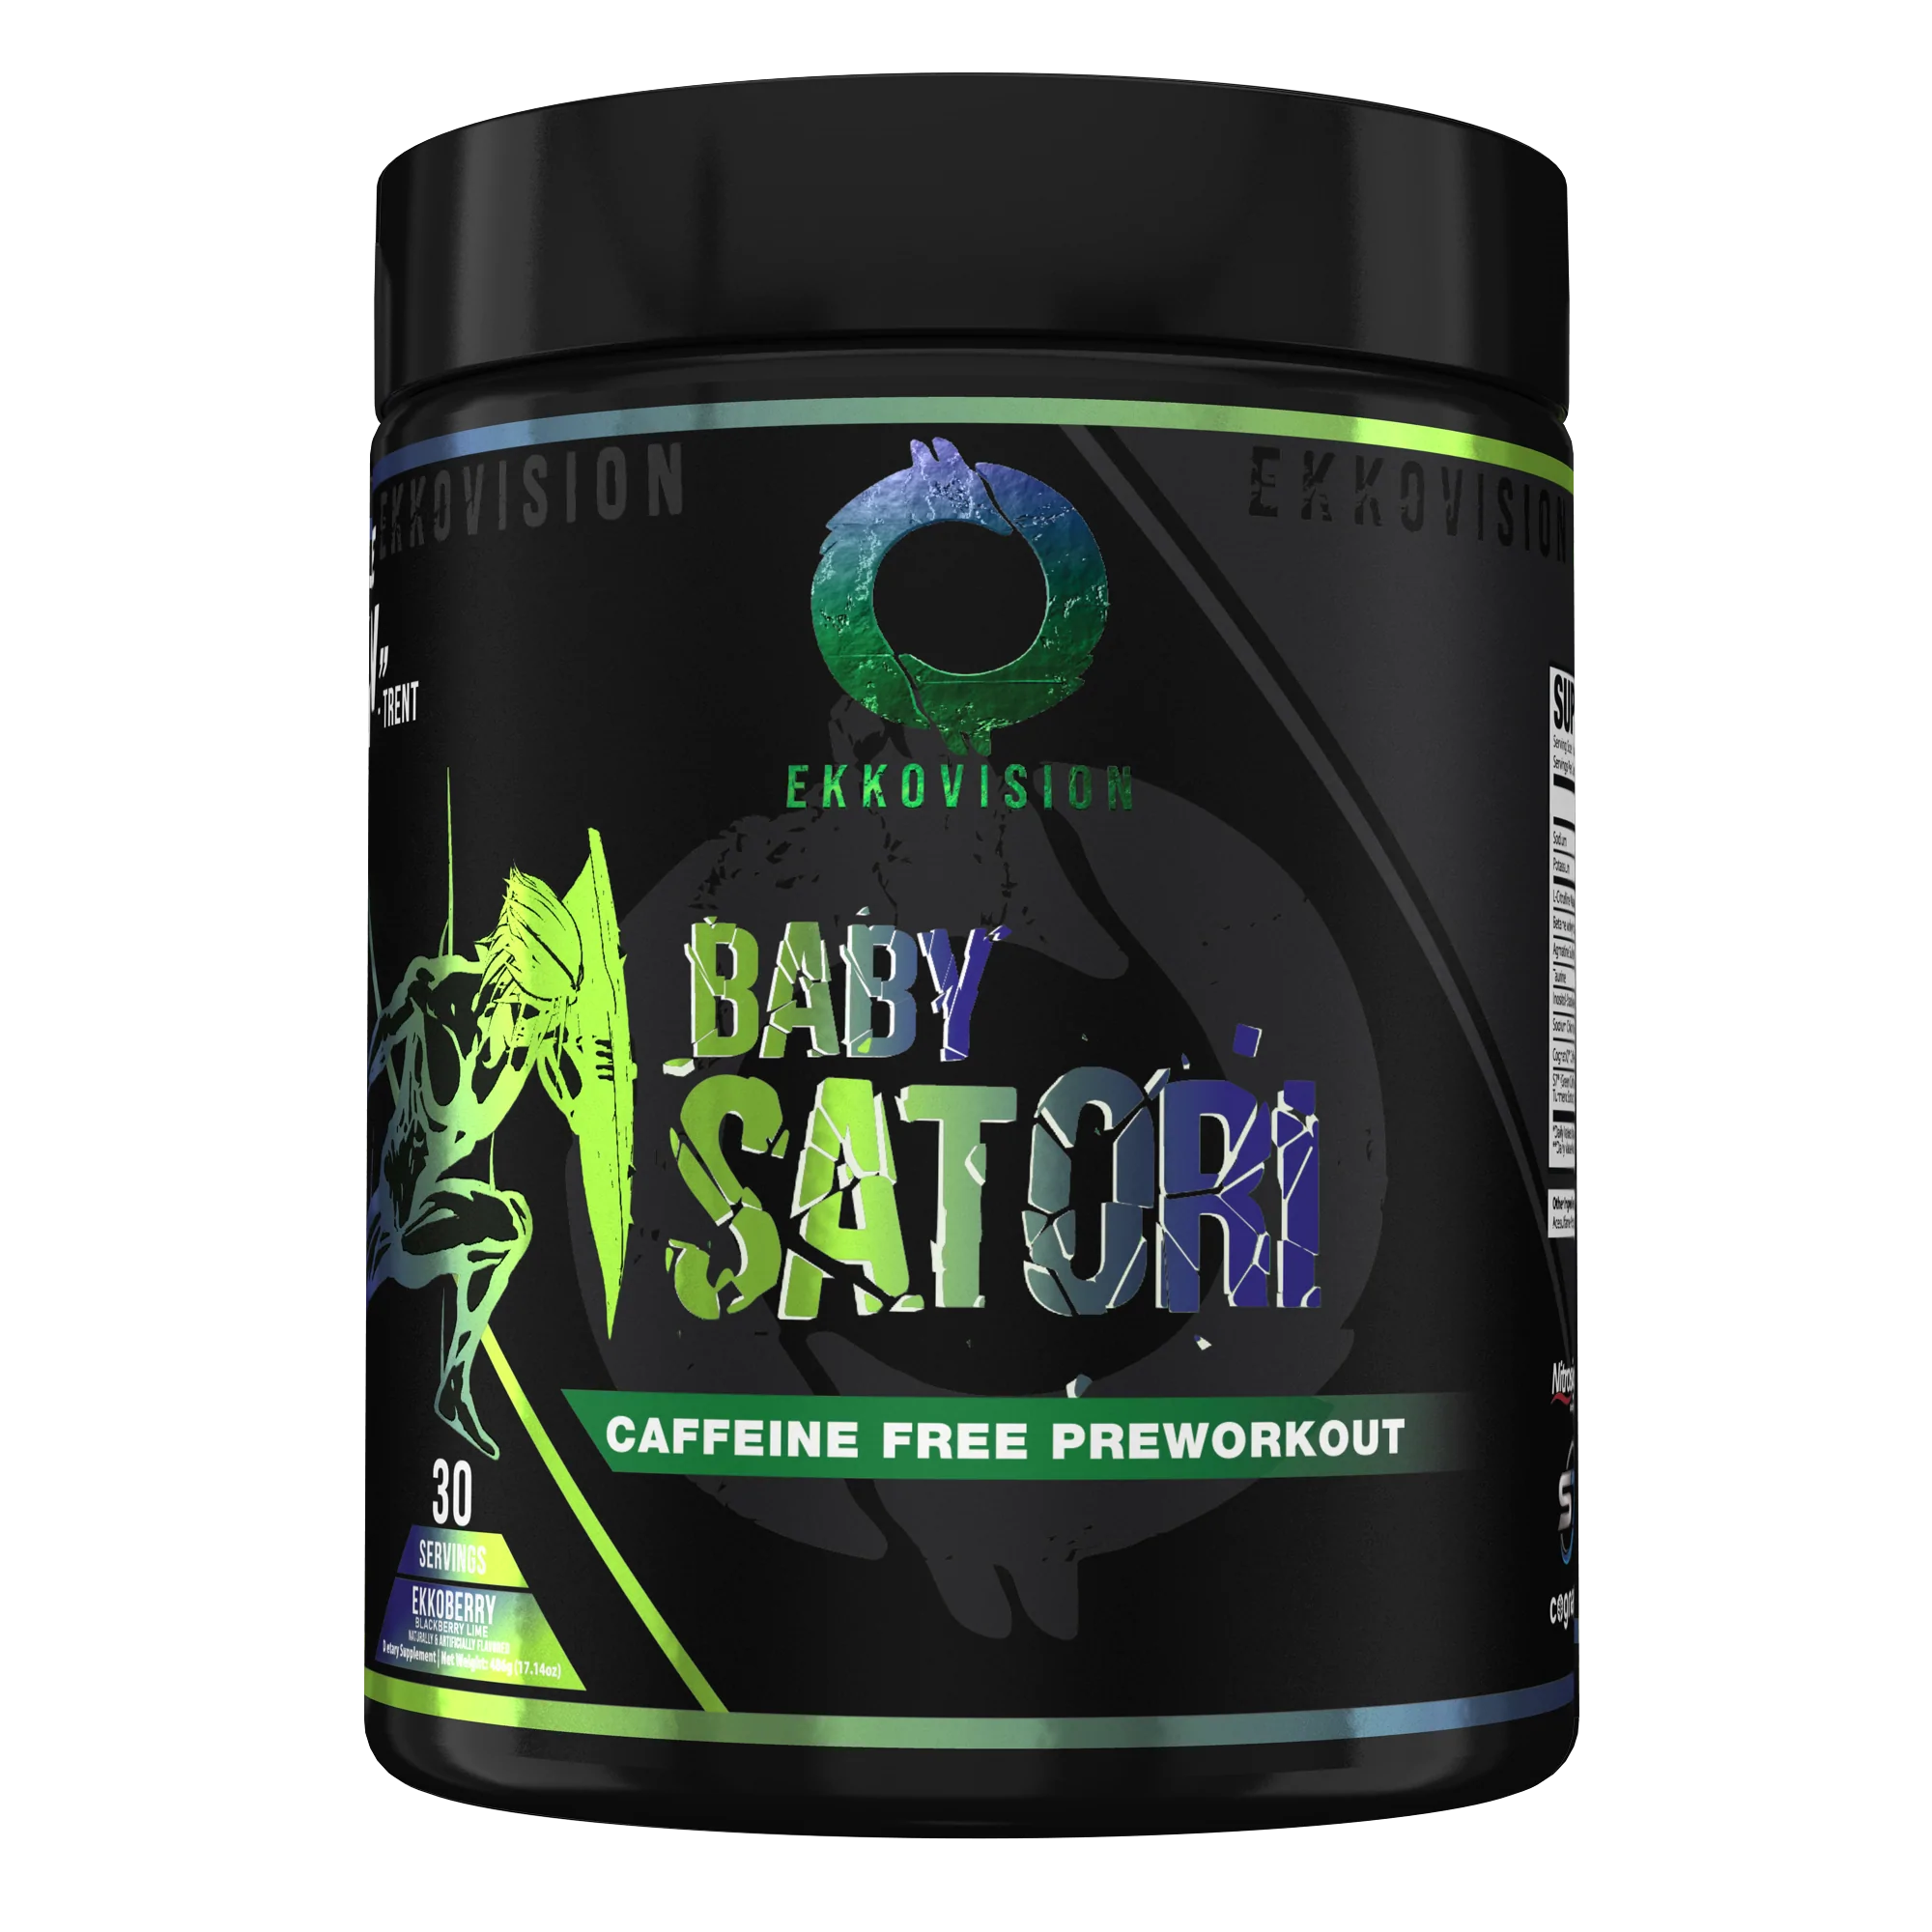 Ekkovision Baby Satori Pump (Stim Free Pump Pre Workout 30 servings)-The Supplement Haven